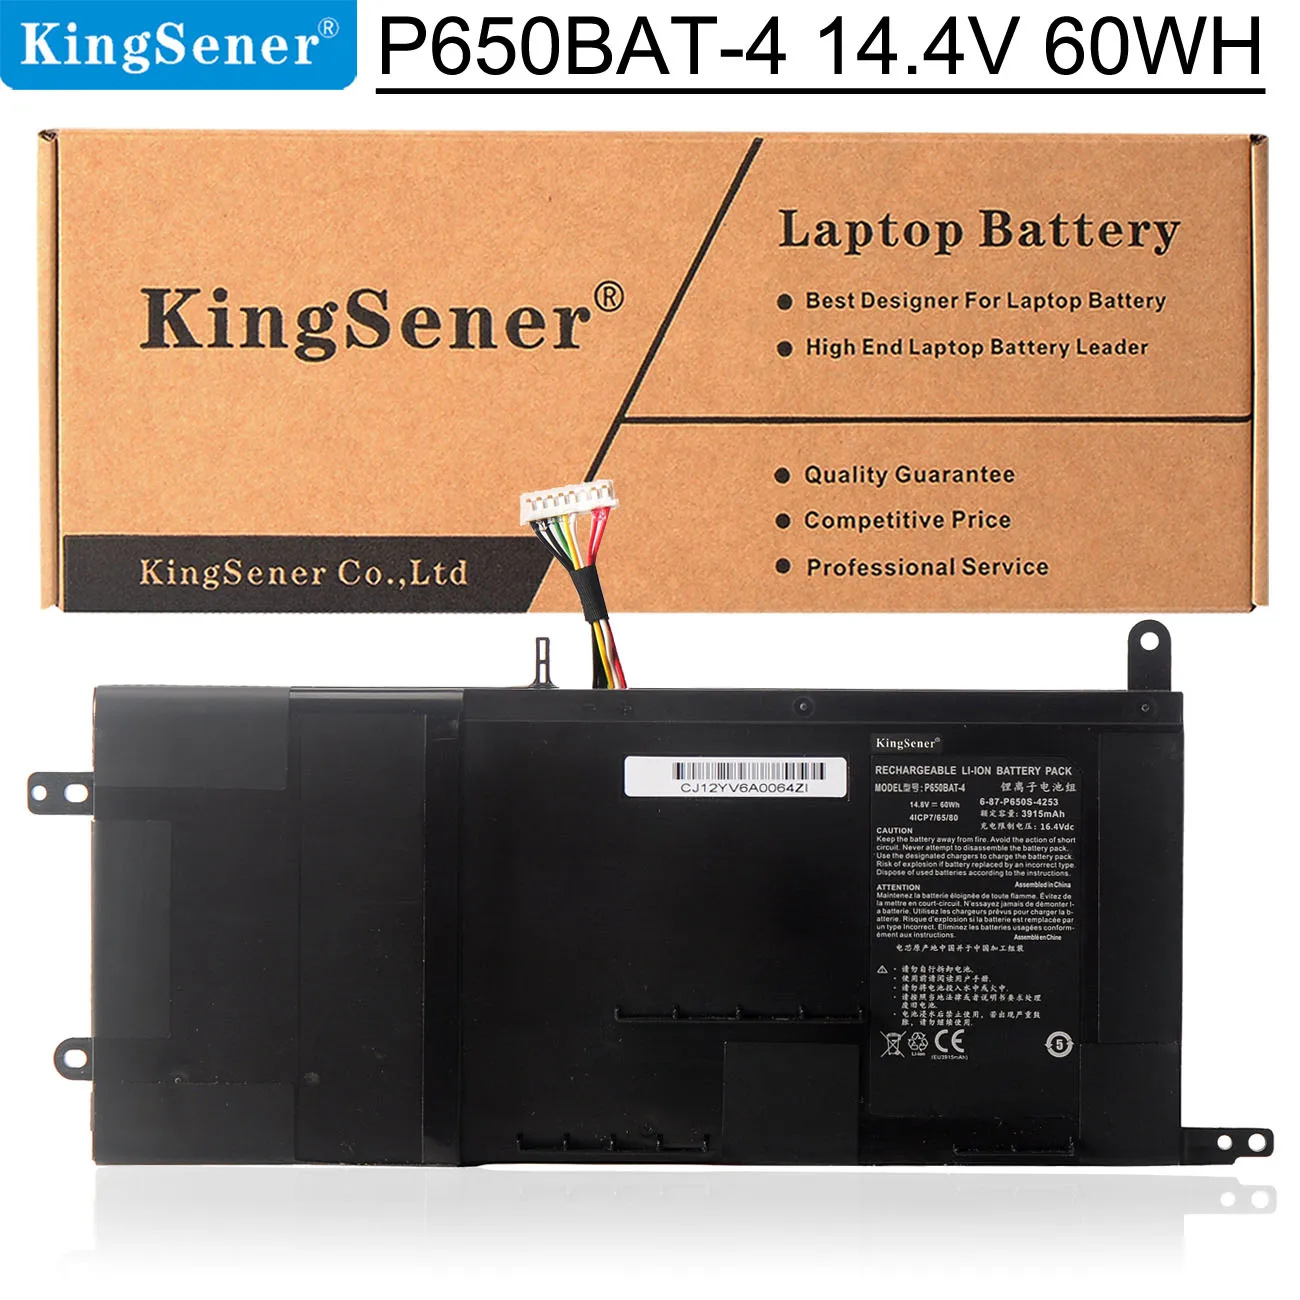 KingSener New P650BAT-4 Laptop Battery For Clevo P650 P651 P655 P671 RA P670-RG SAGER NP8650 NP8651 NP8652 6-87-P650S-4U311 60Wh